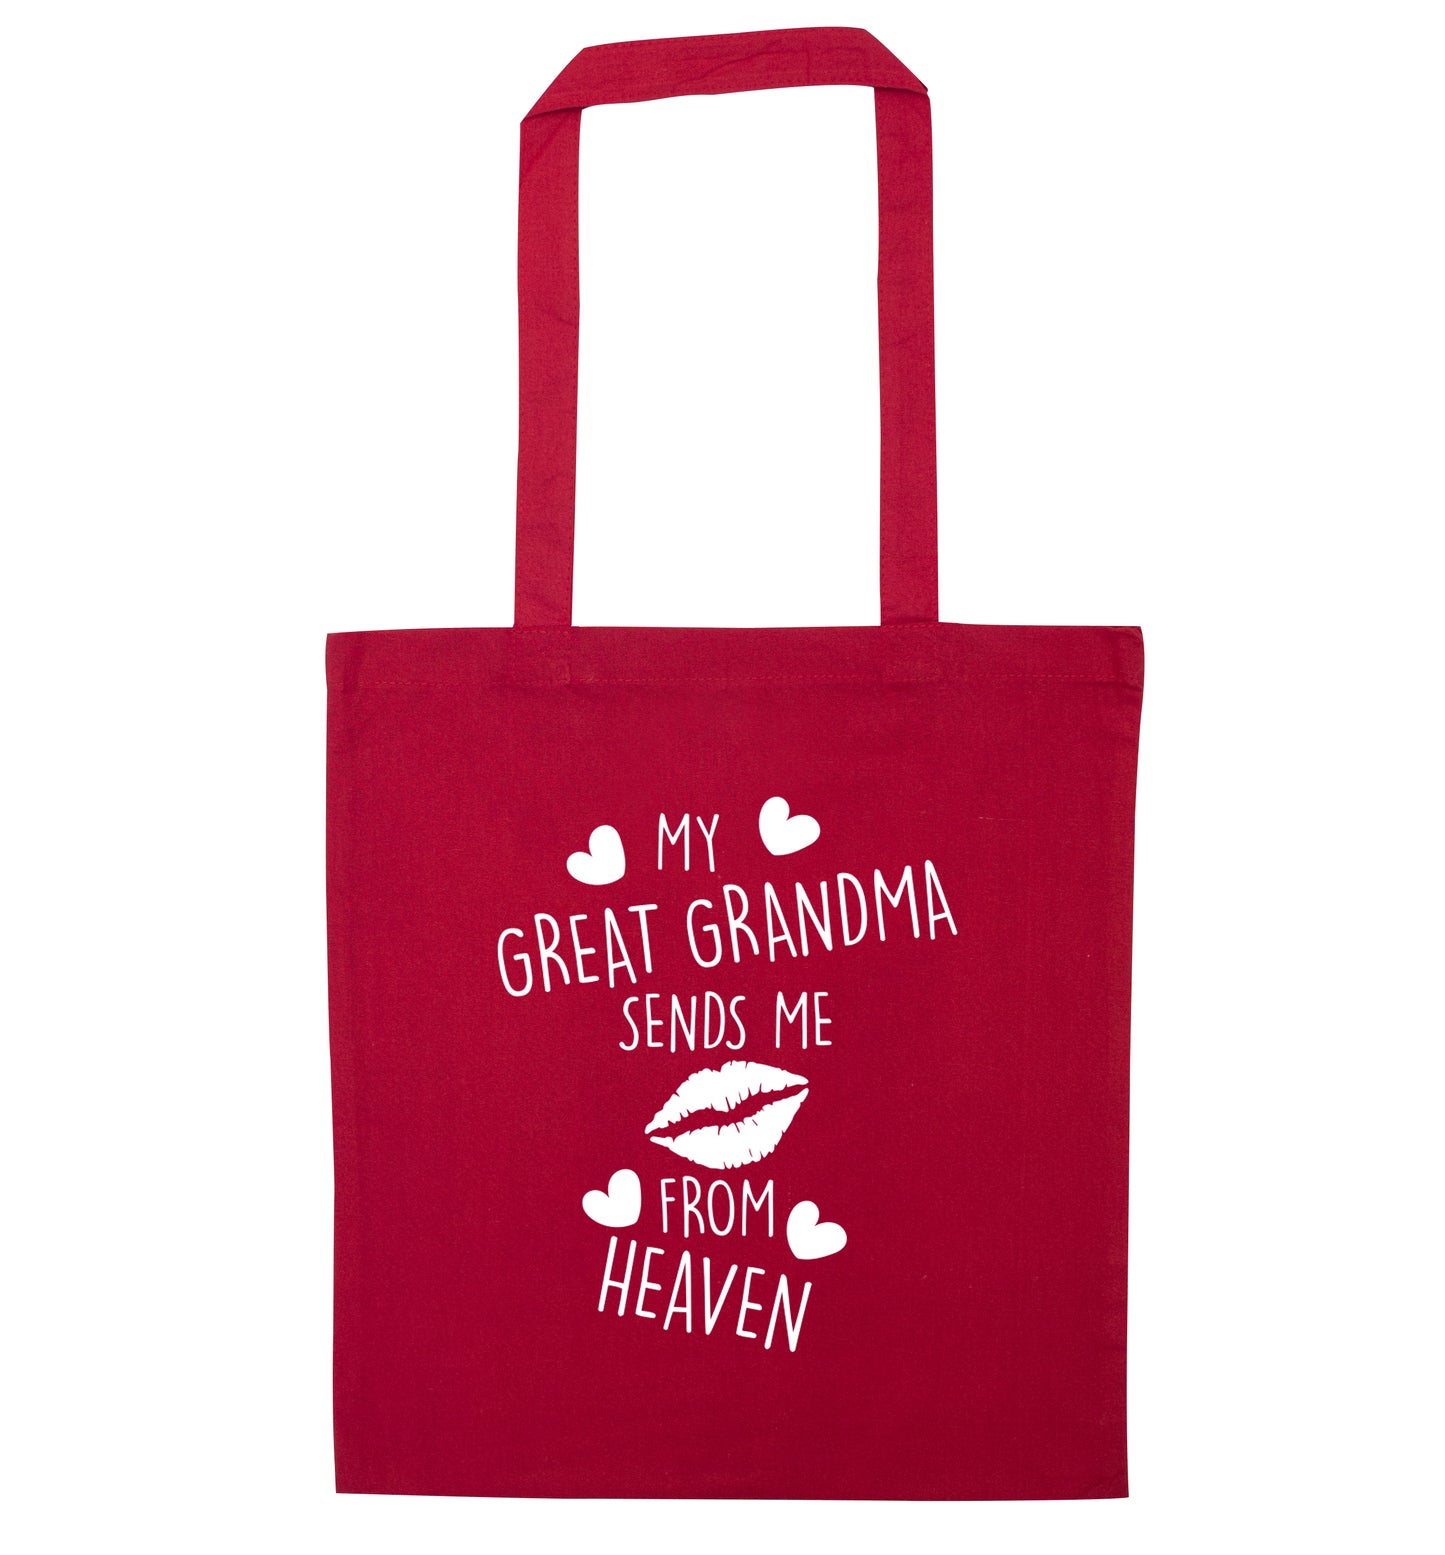 My great grandma sends me kisses from heaven red tote bag